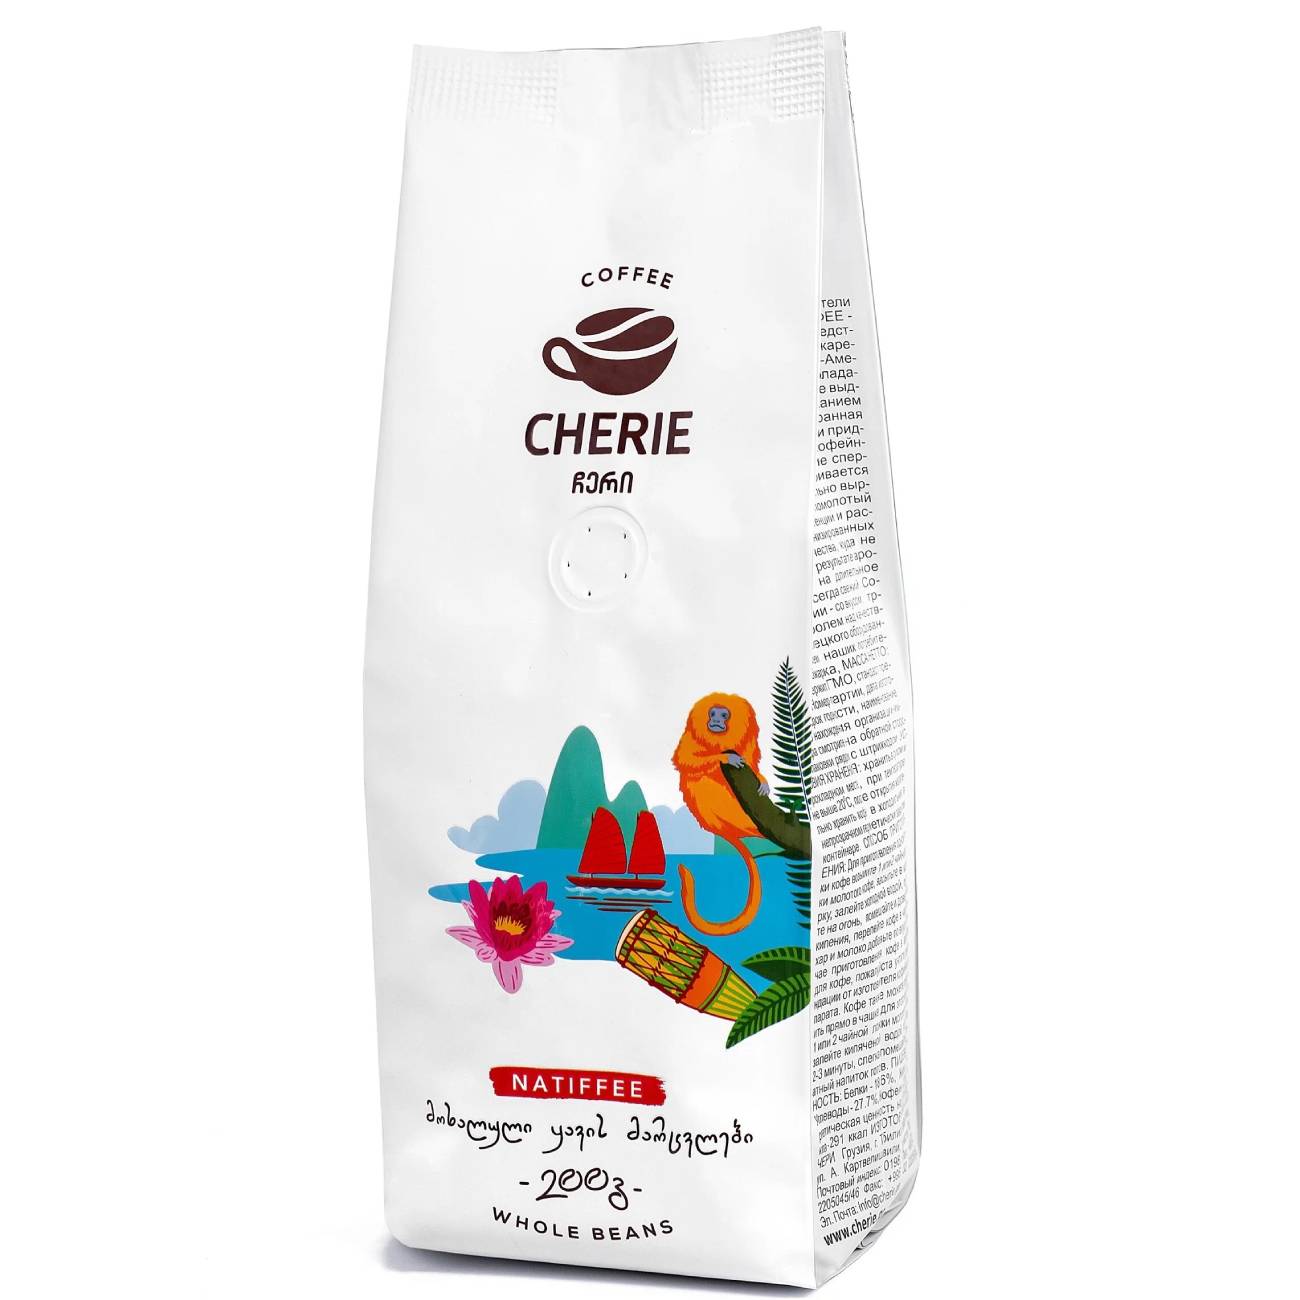 Кофе Cherie зерно натиффее, 200 г кофе карт нуар 800 г интенс абсолю зерно м у